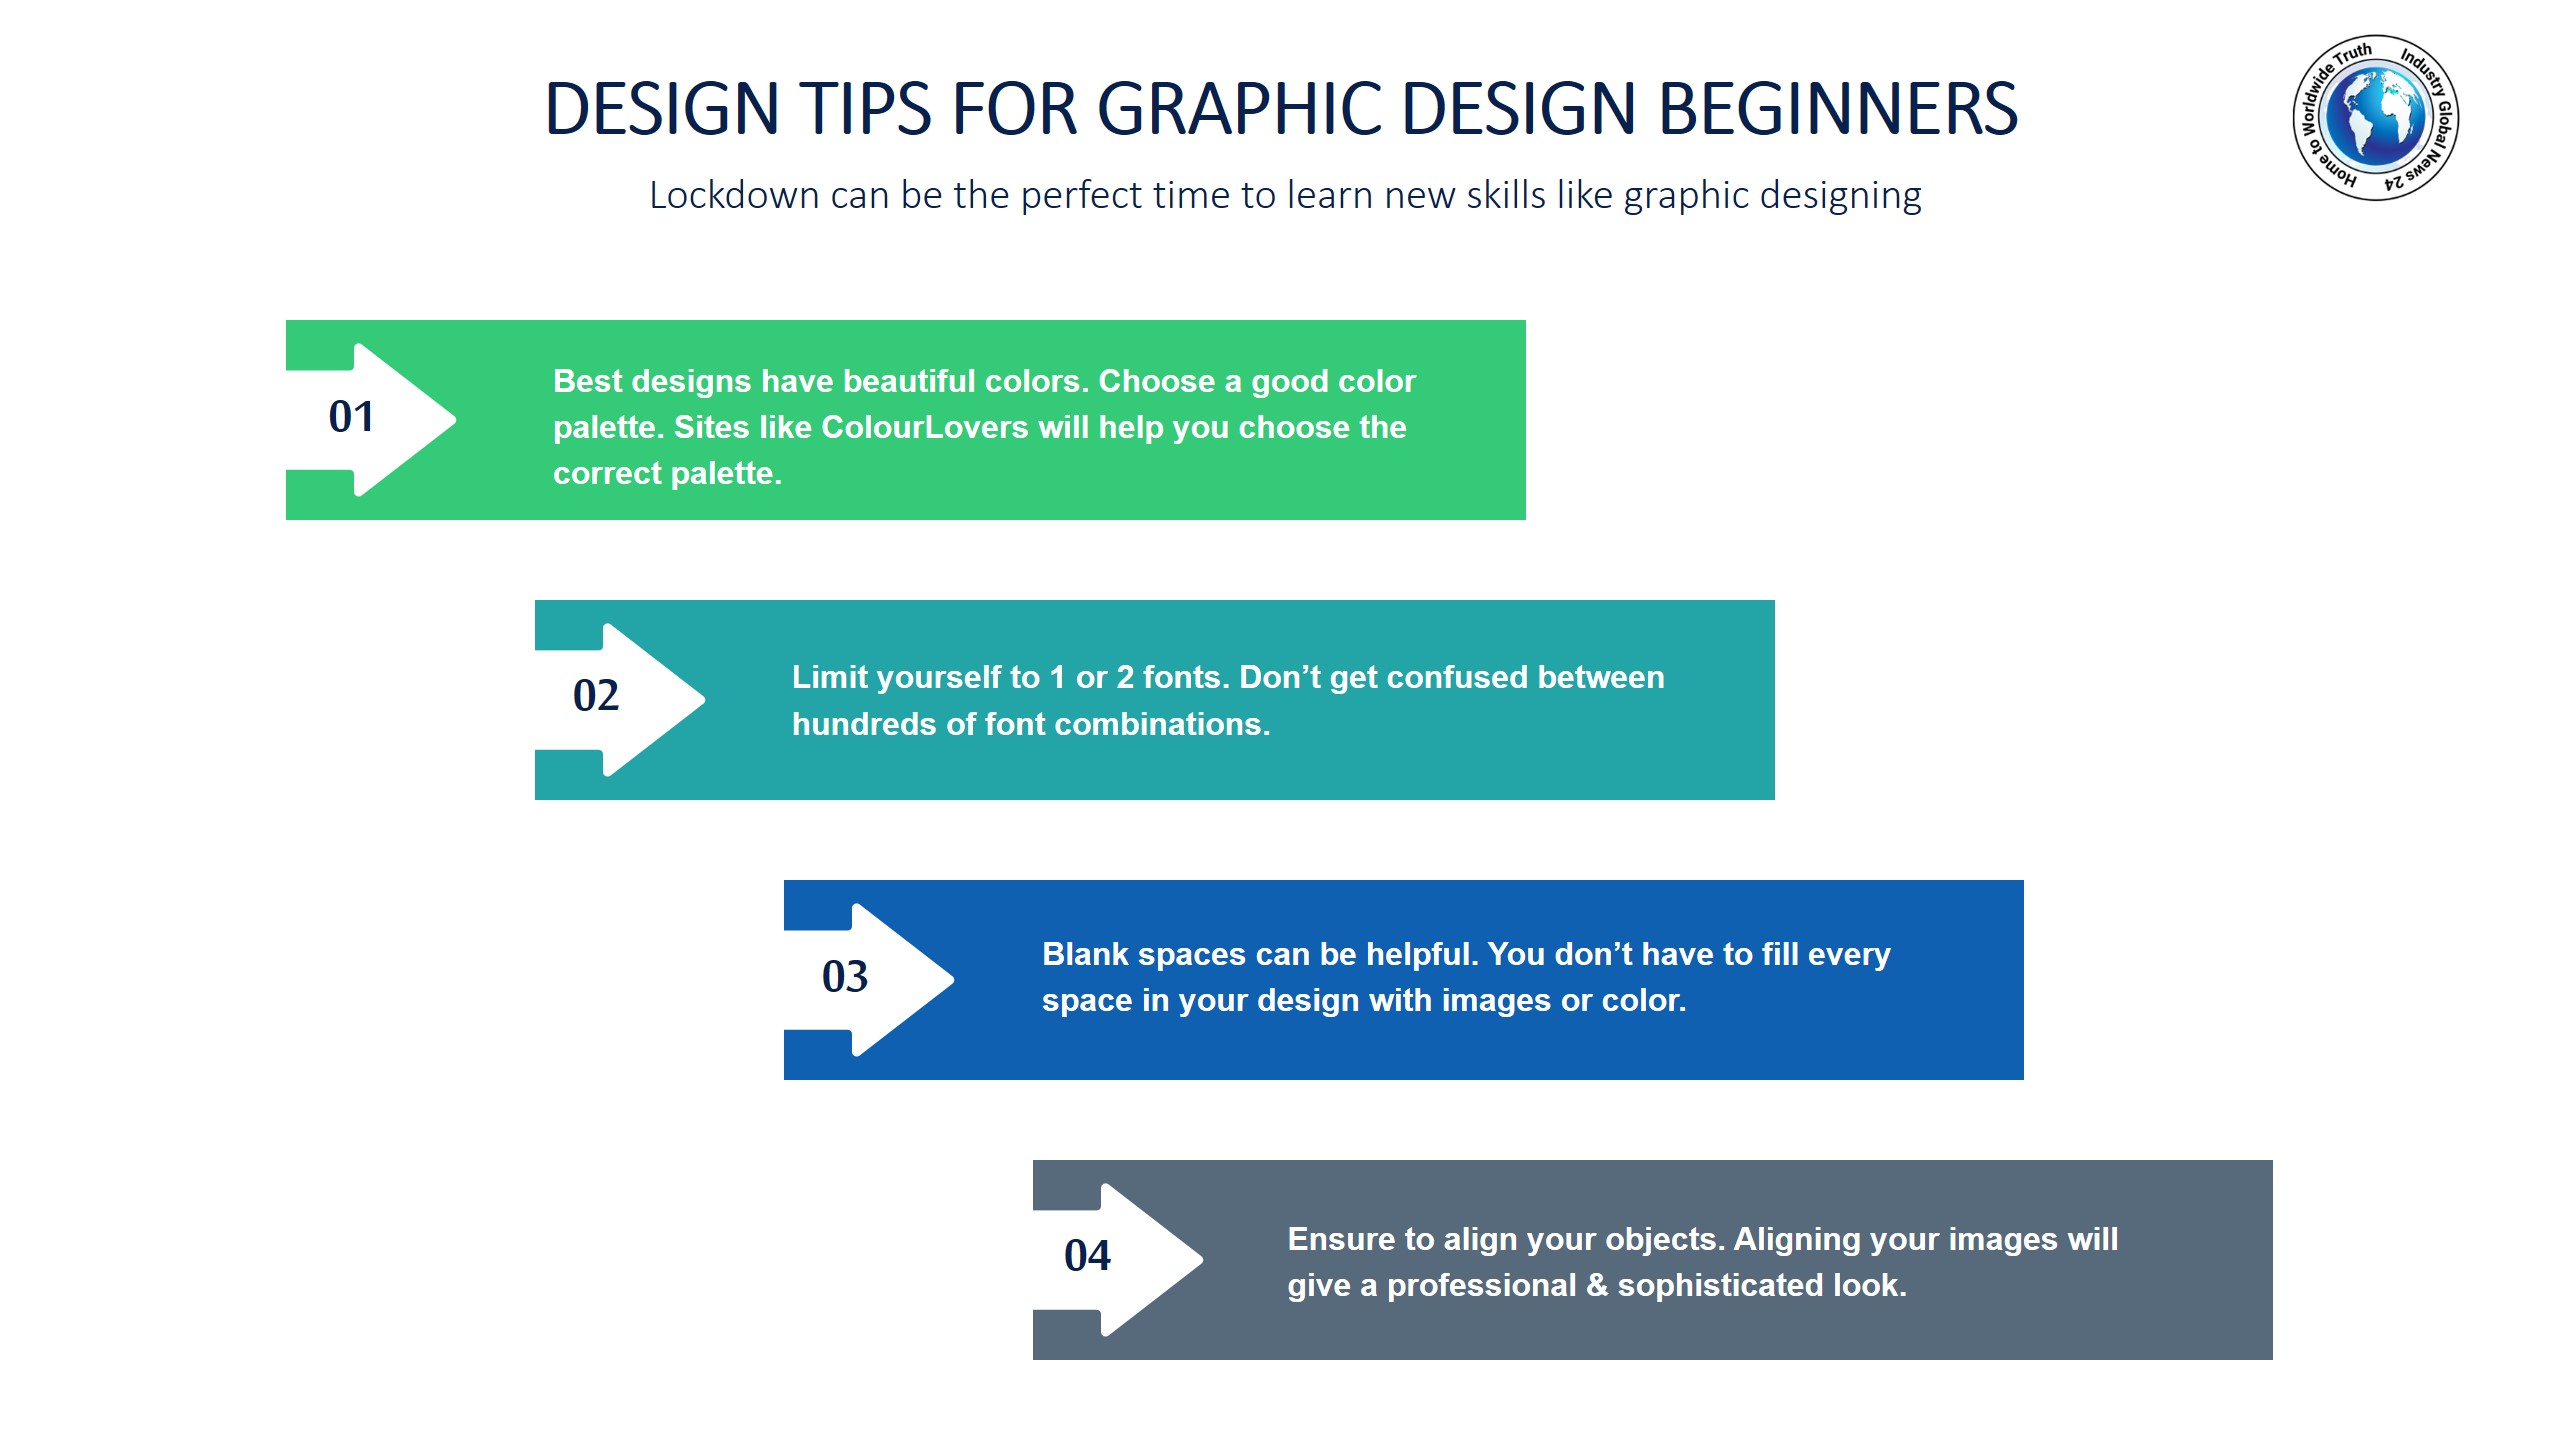 Design tips for graphic design beginners